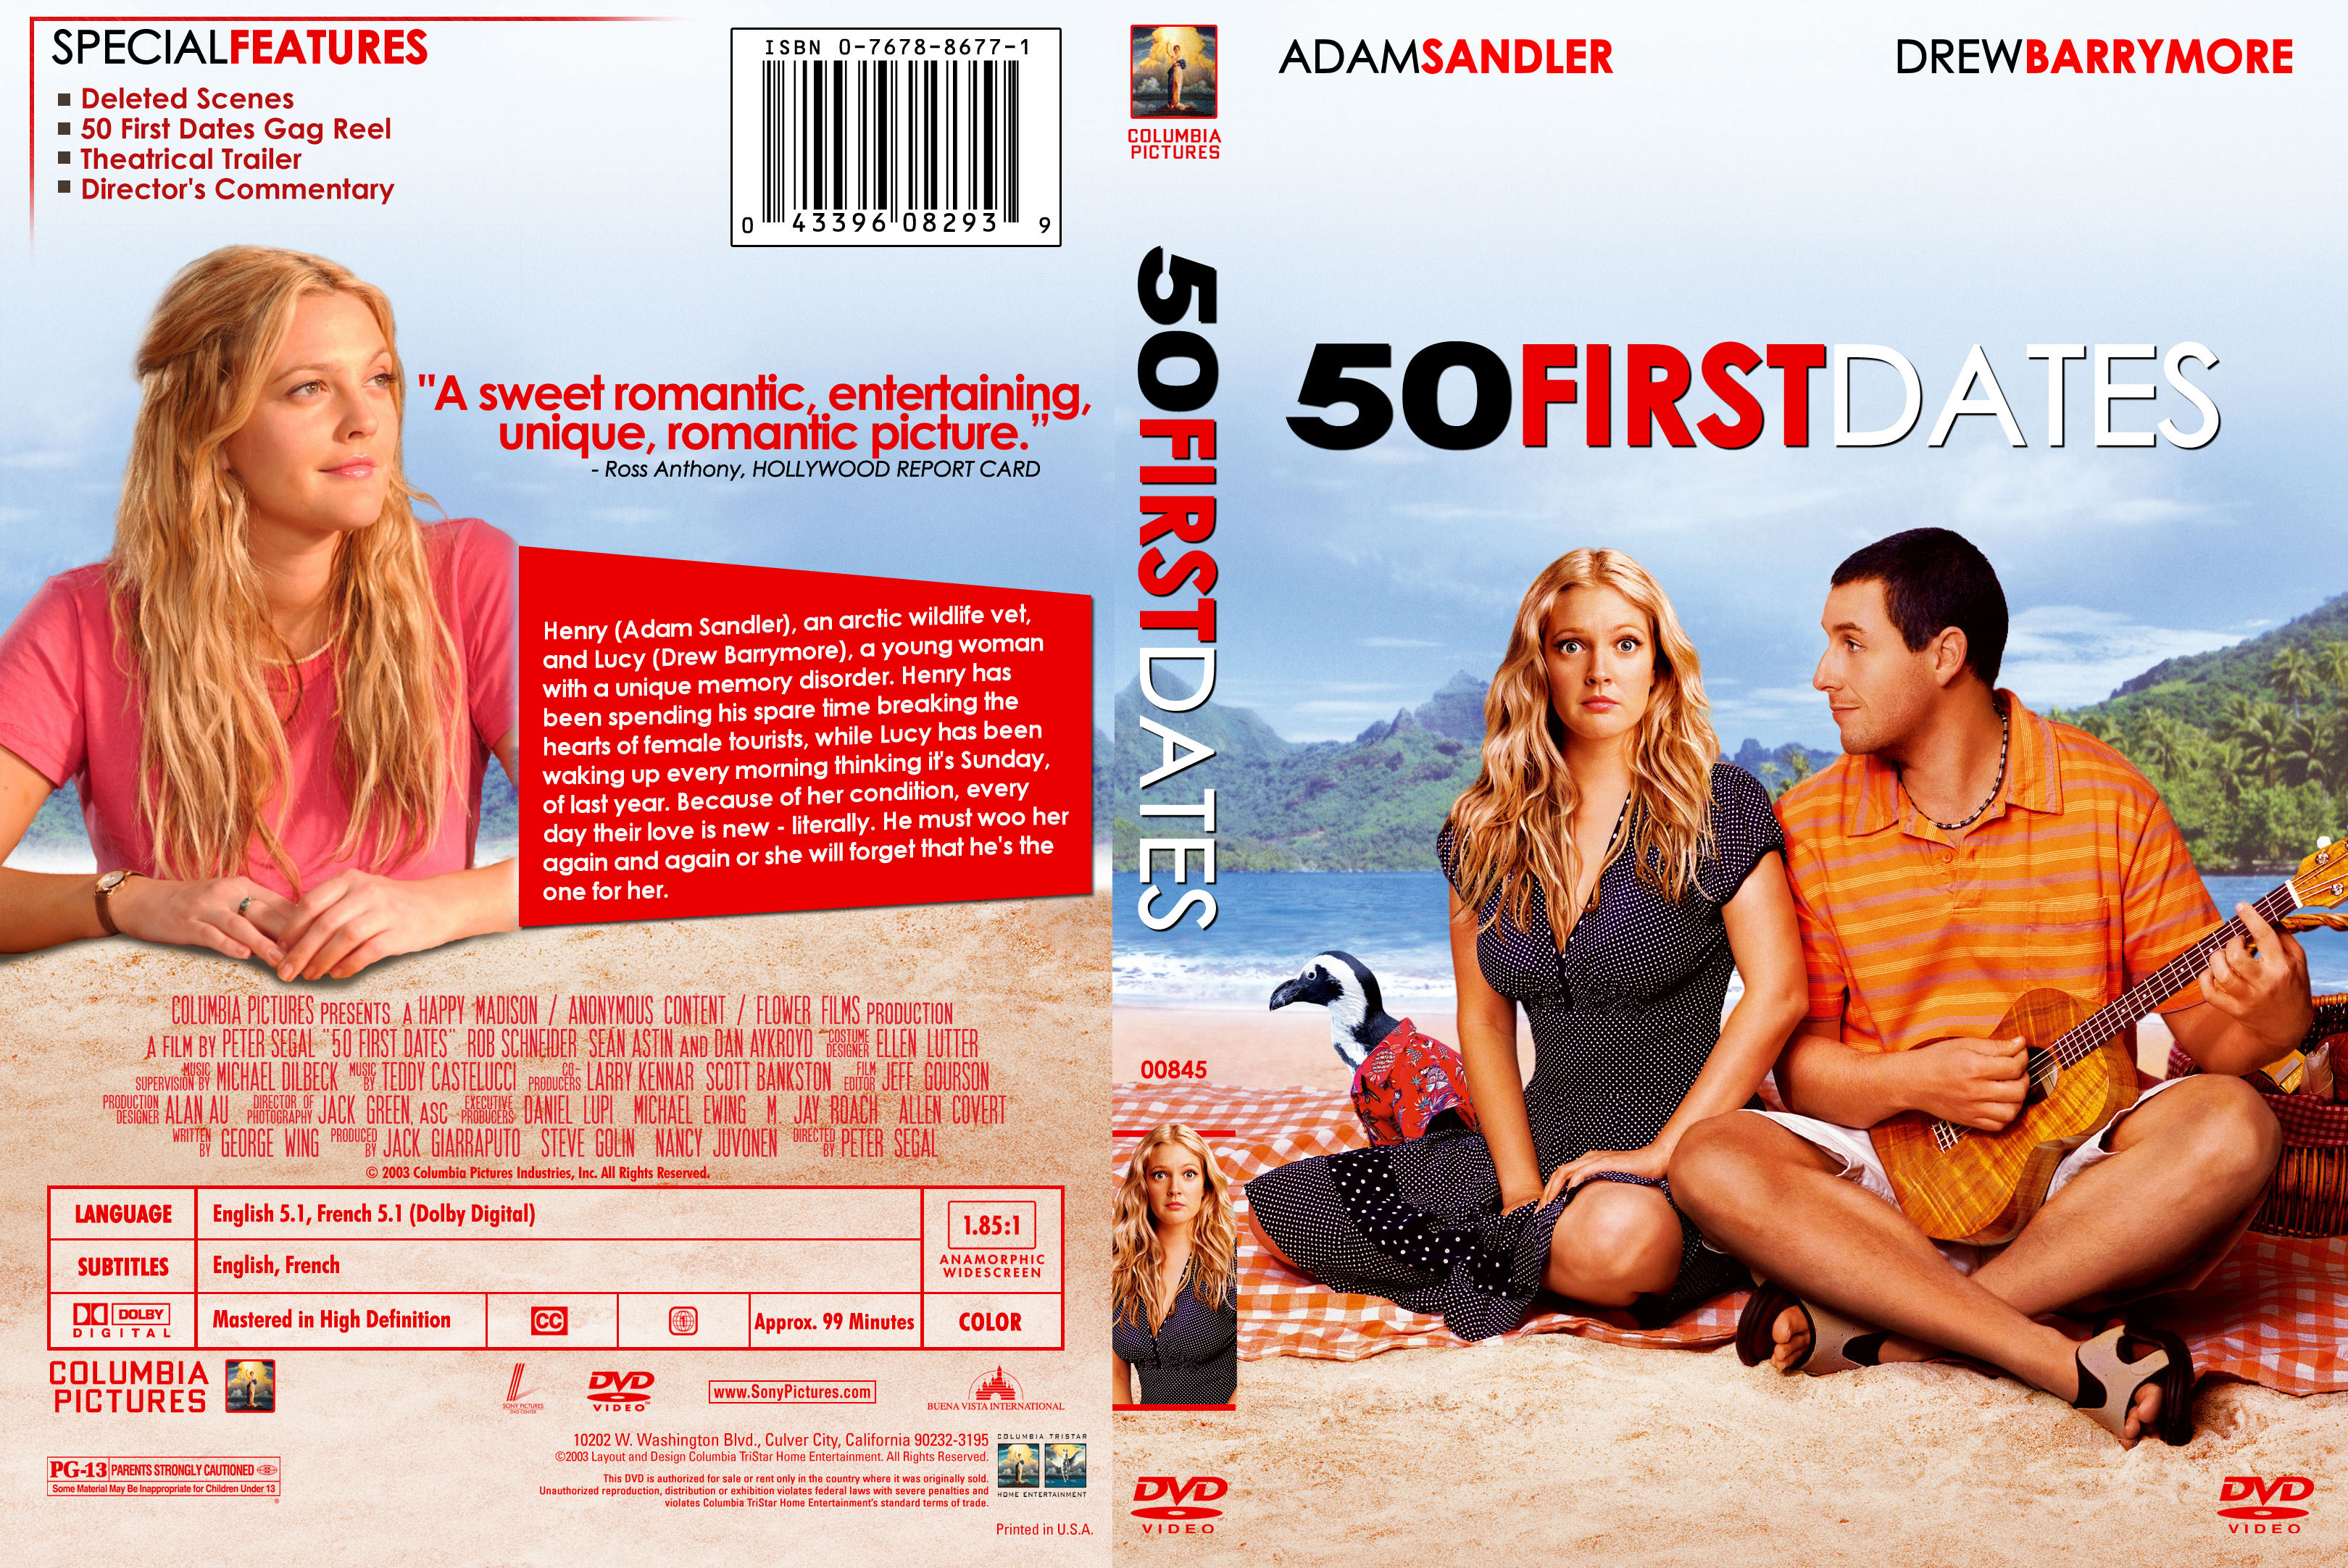 50 first dates movie download